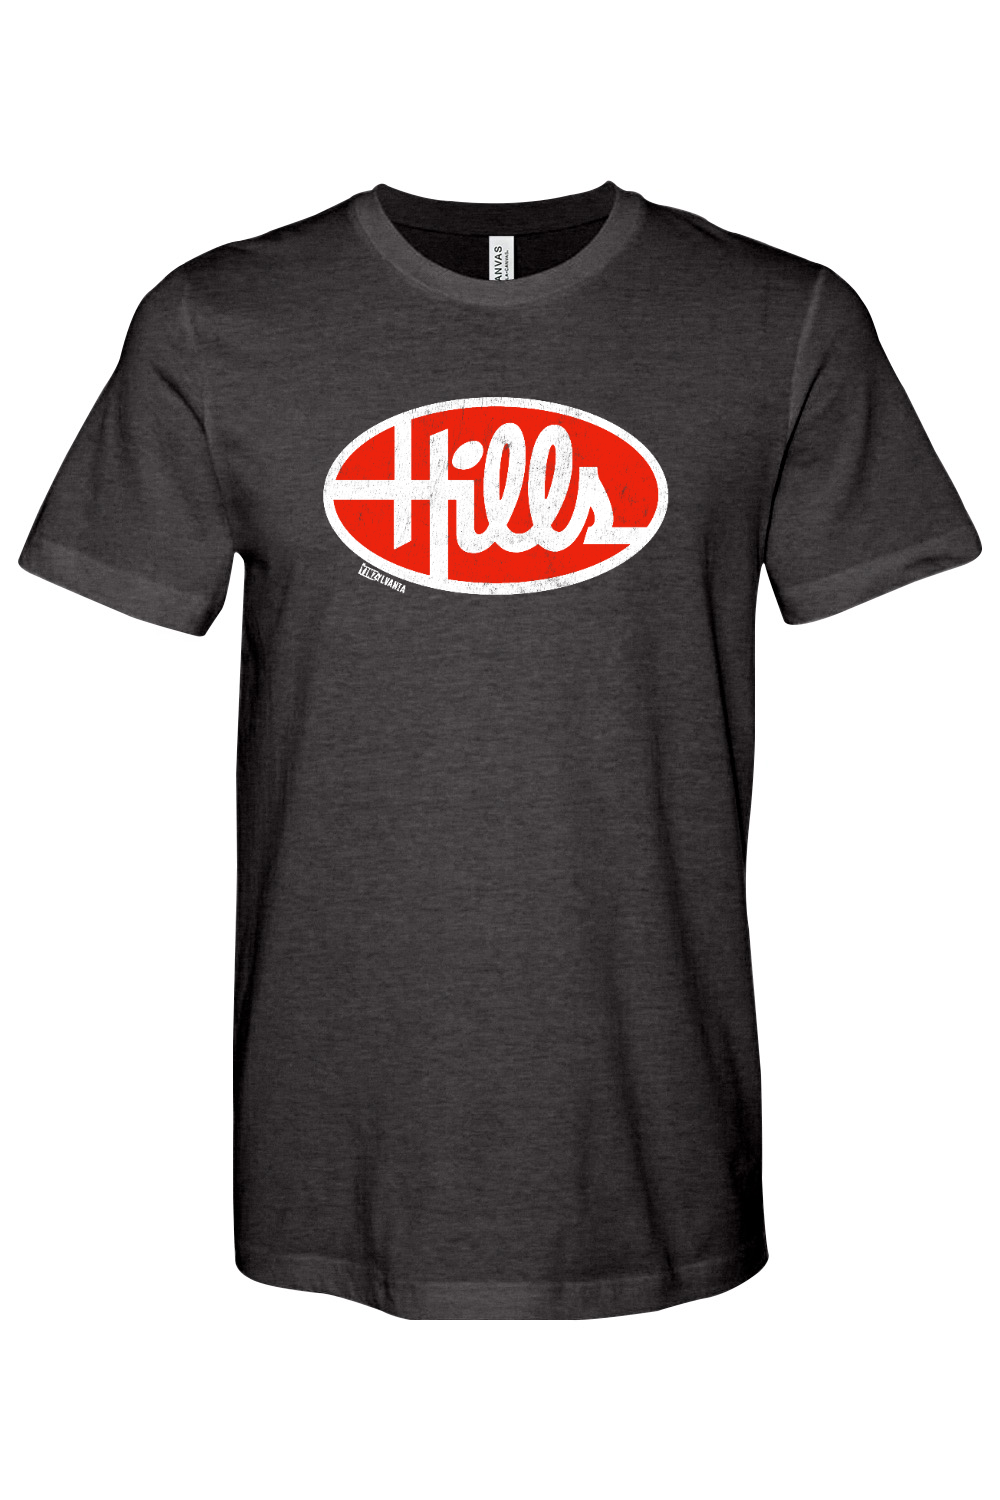 Hills retro logo - Bella + Canvas Heathered Jersey Tee - Yinzylvania